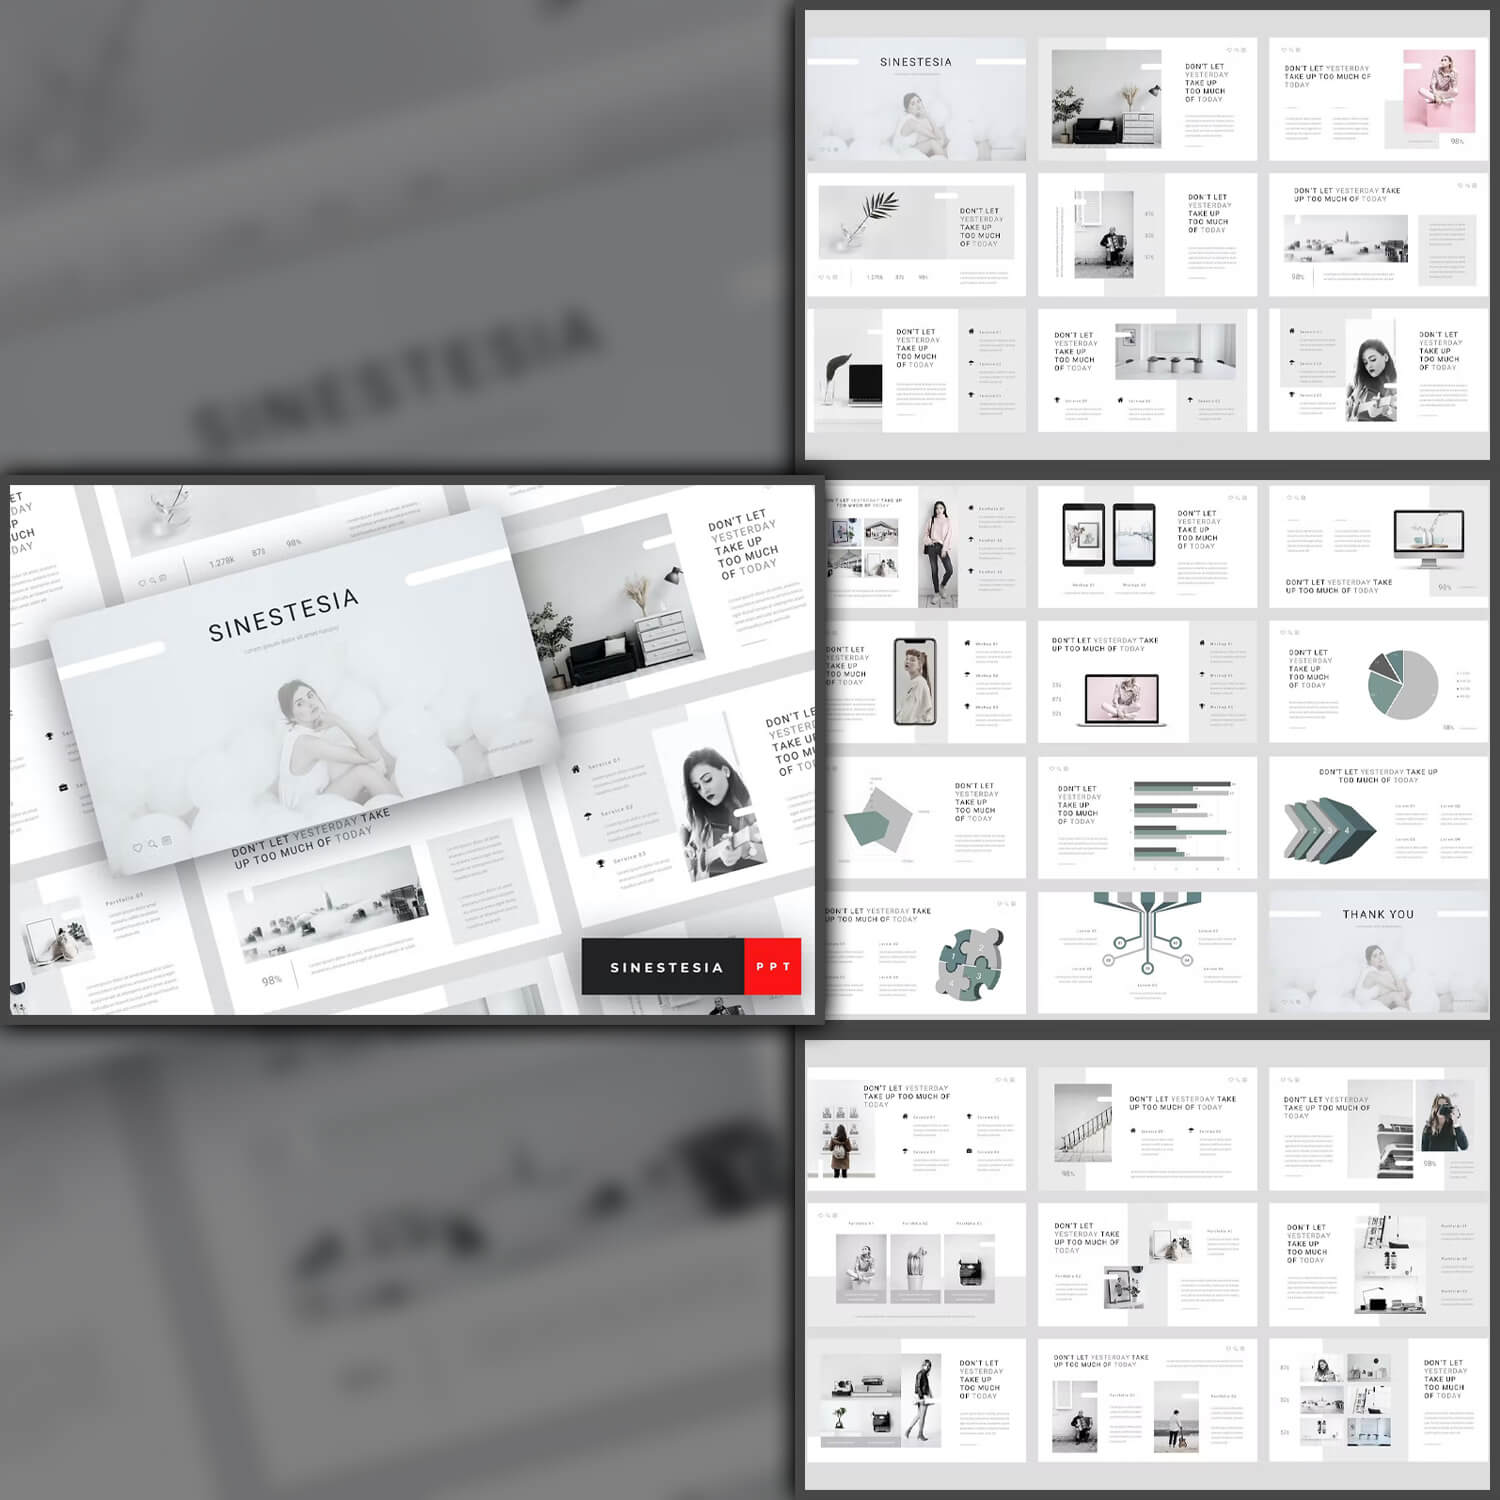 Four slides with information of Sinestesia magazine.